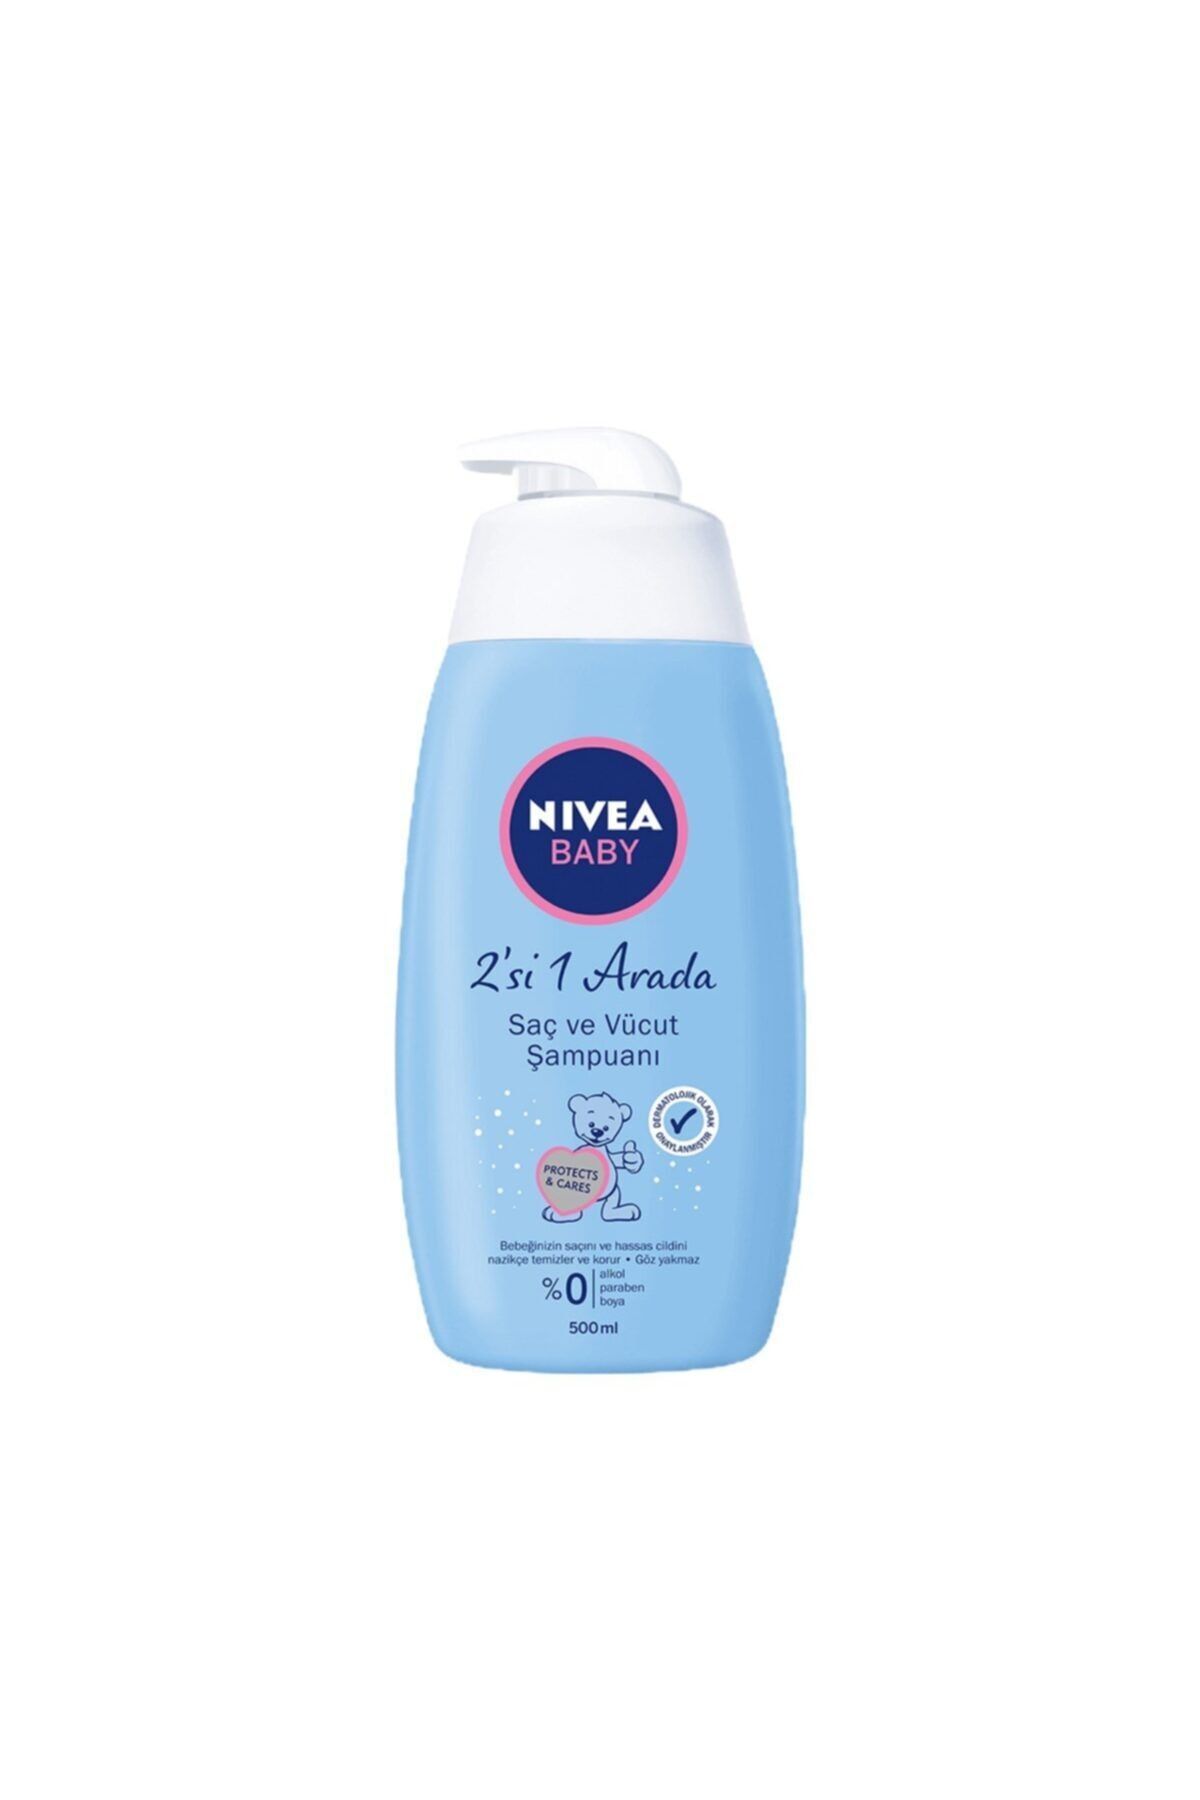 NIVEA Baby Rahatlatıcı Parabensiz Saç Ve Vücut Şampuanı 500 Ml. ,,nhrscbkm23022